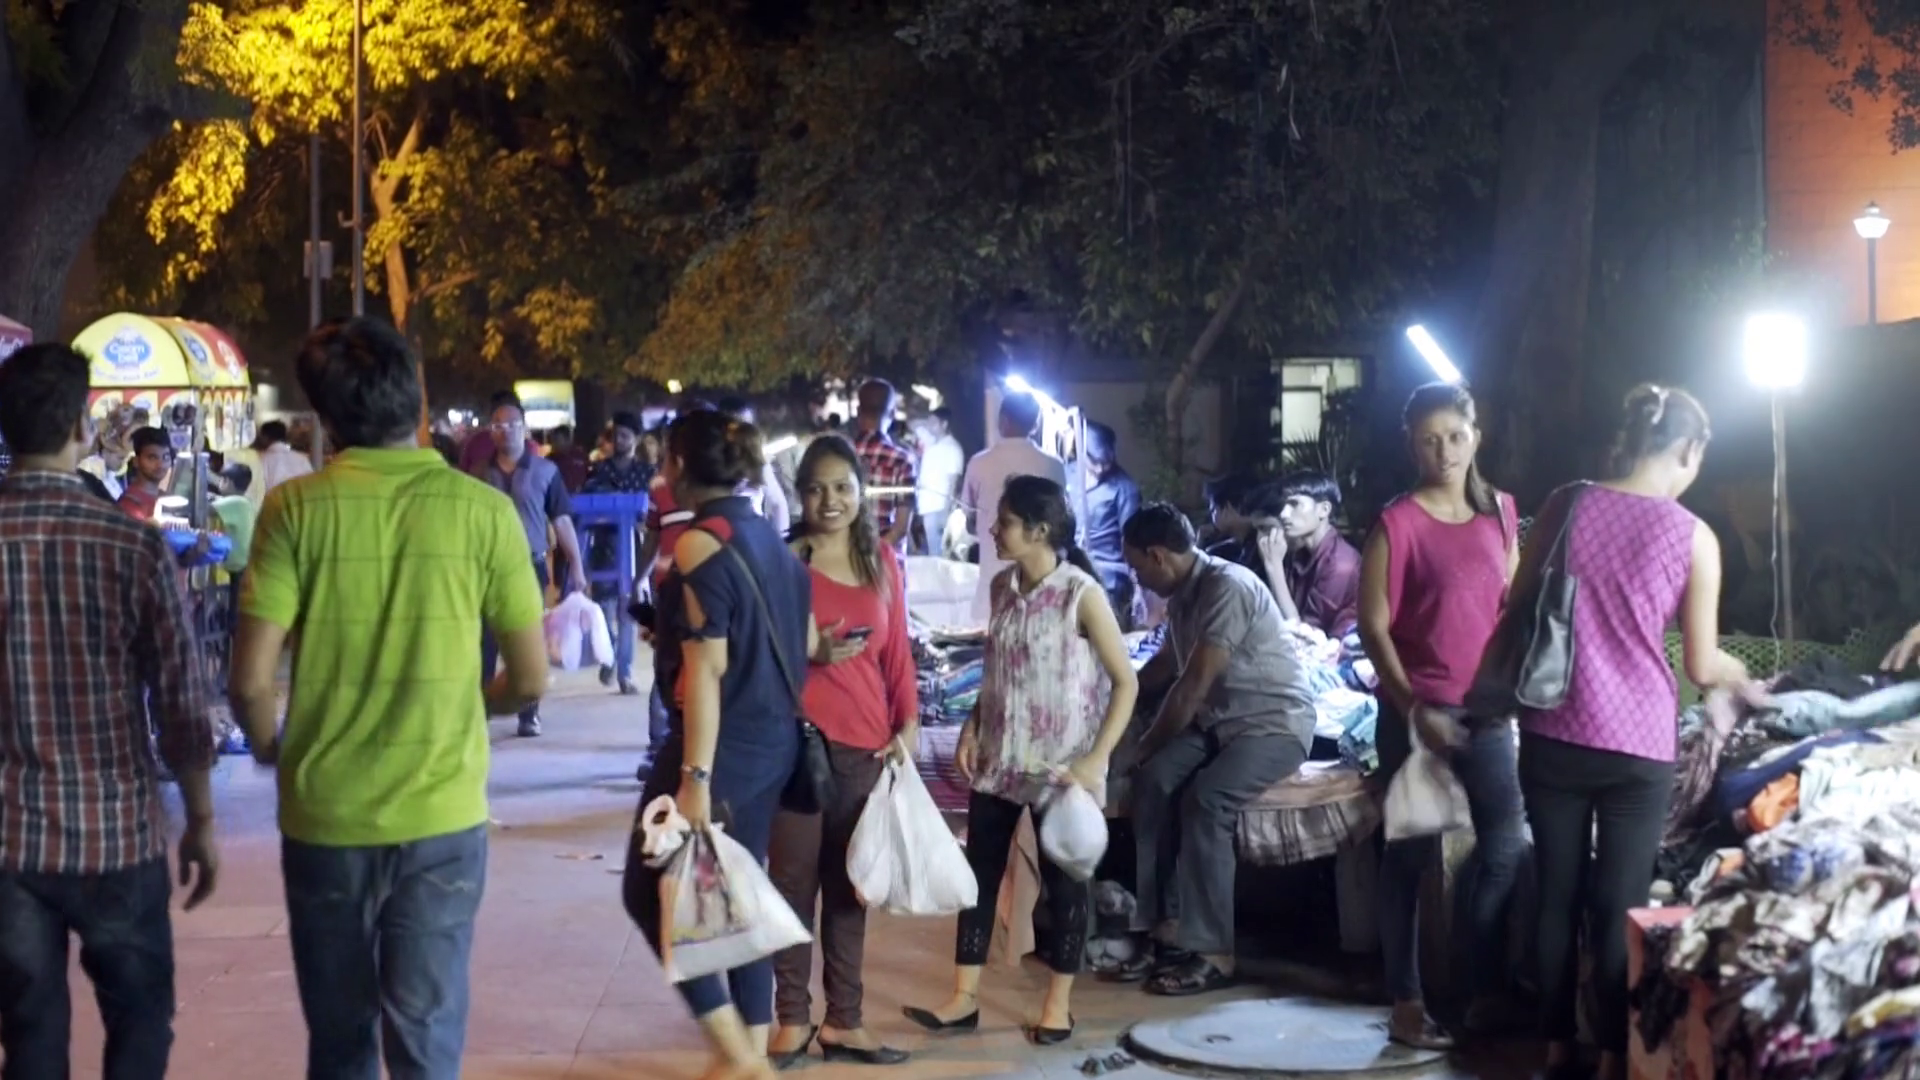 Busy nighttime market bazaar, crowd of people walk, New Delhi, India ...